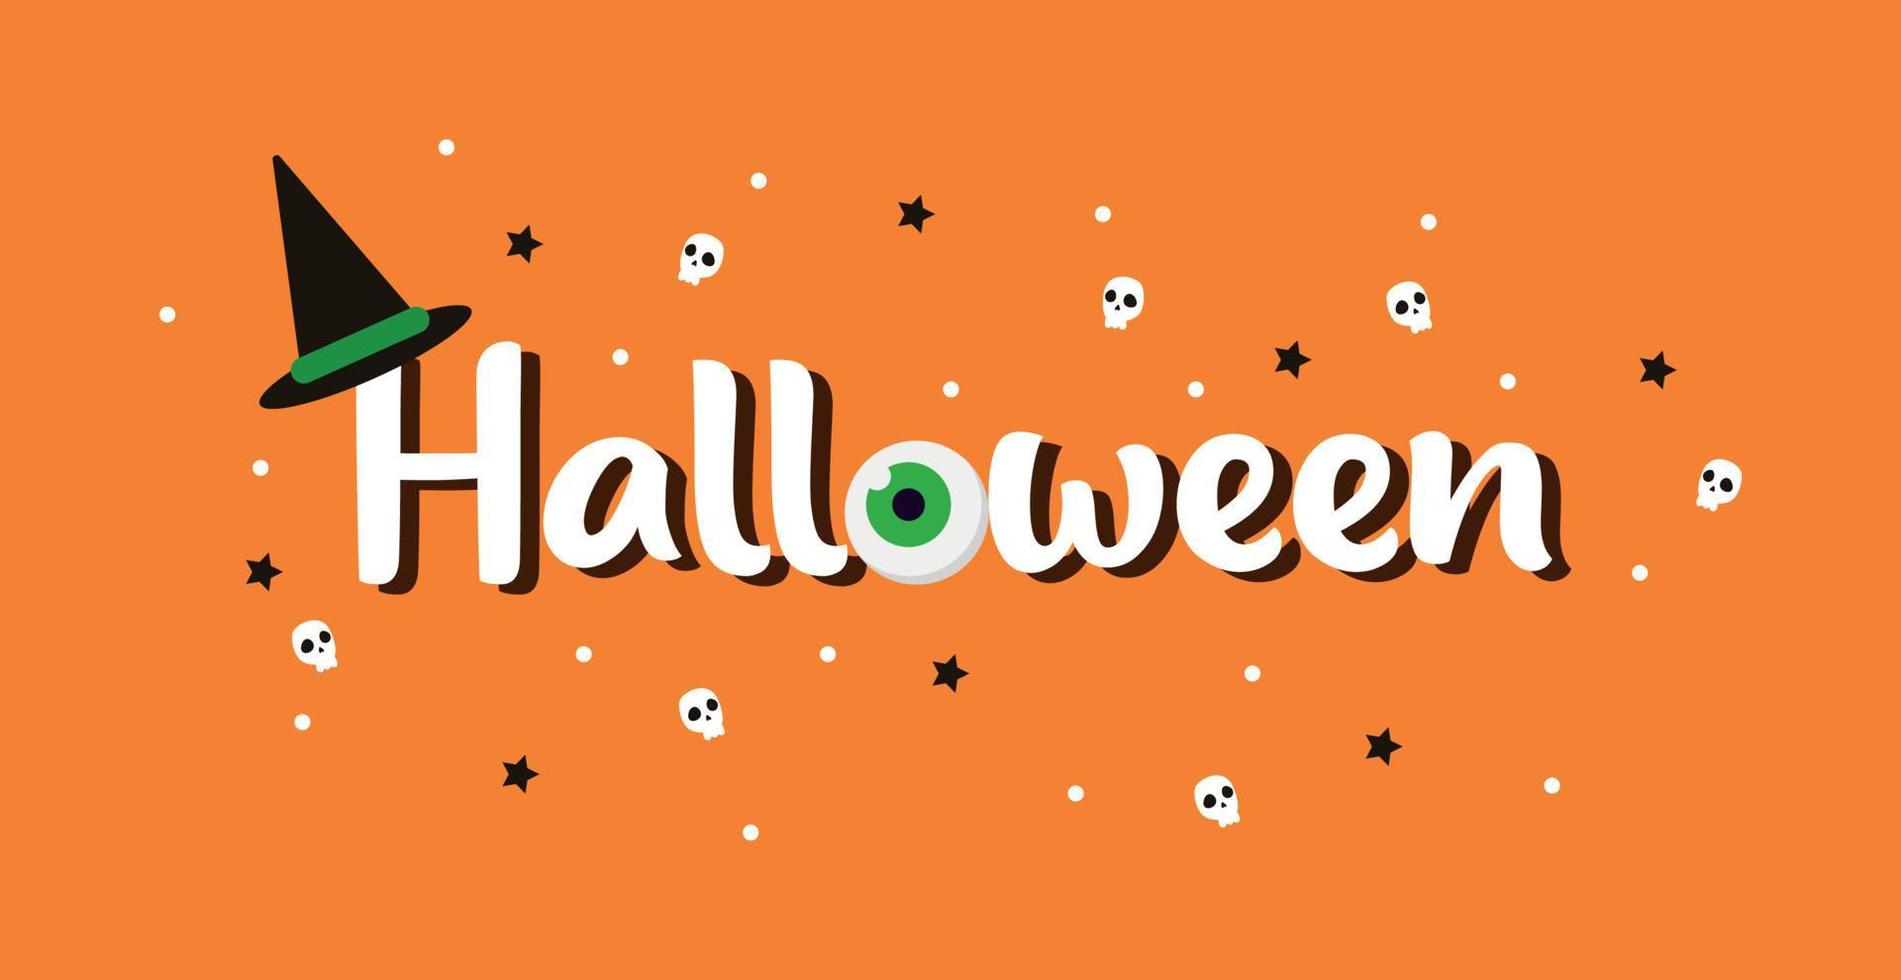 Halloween colorful bright web banner congratulation - Vector